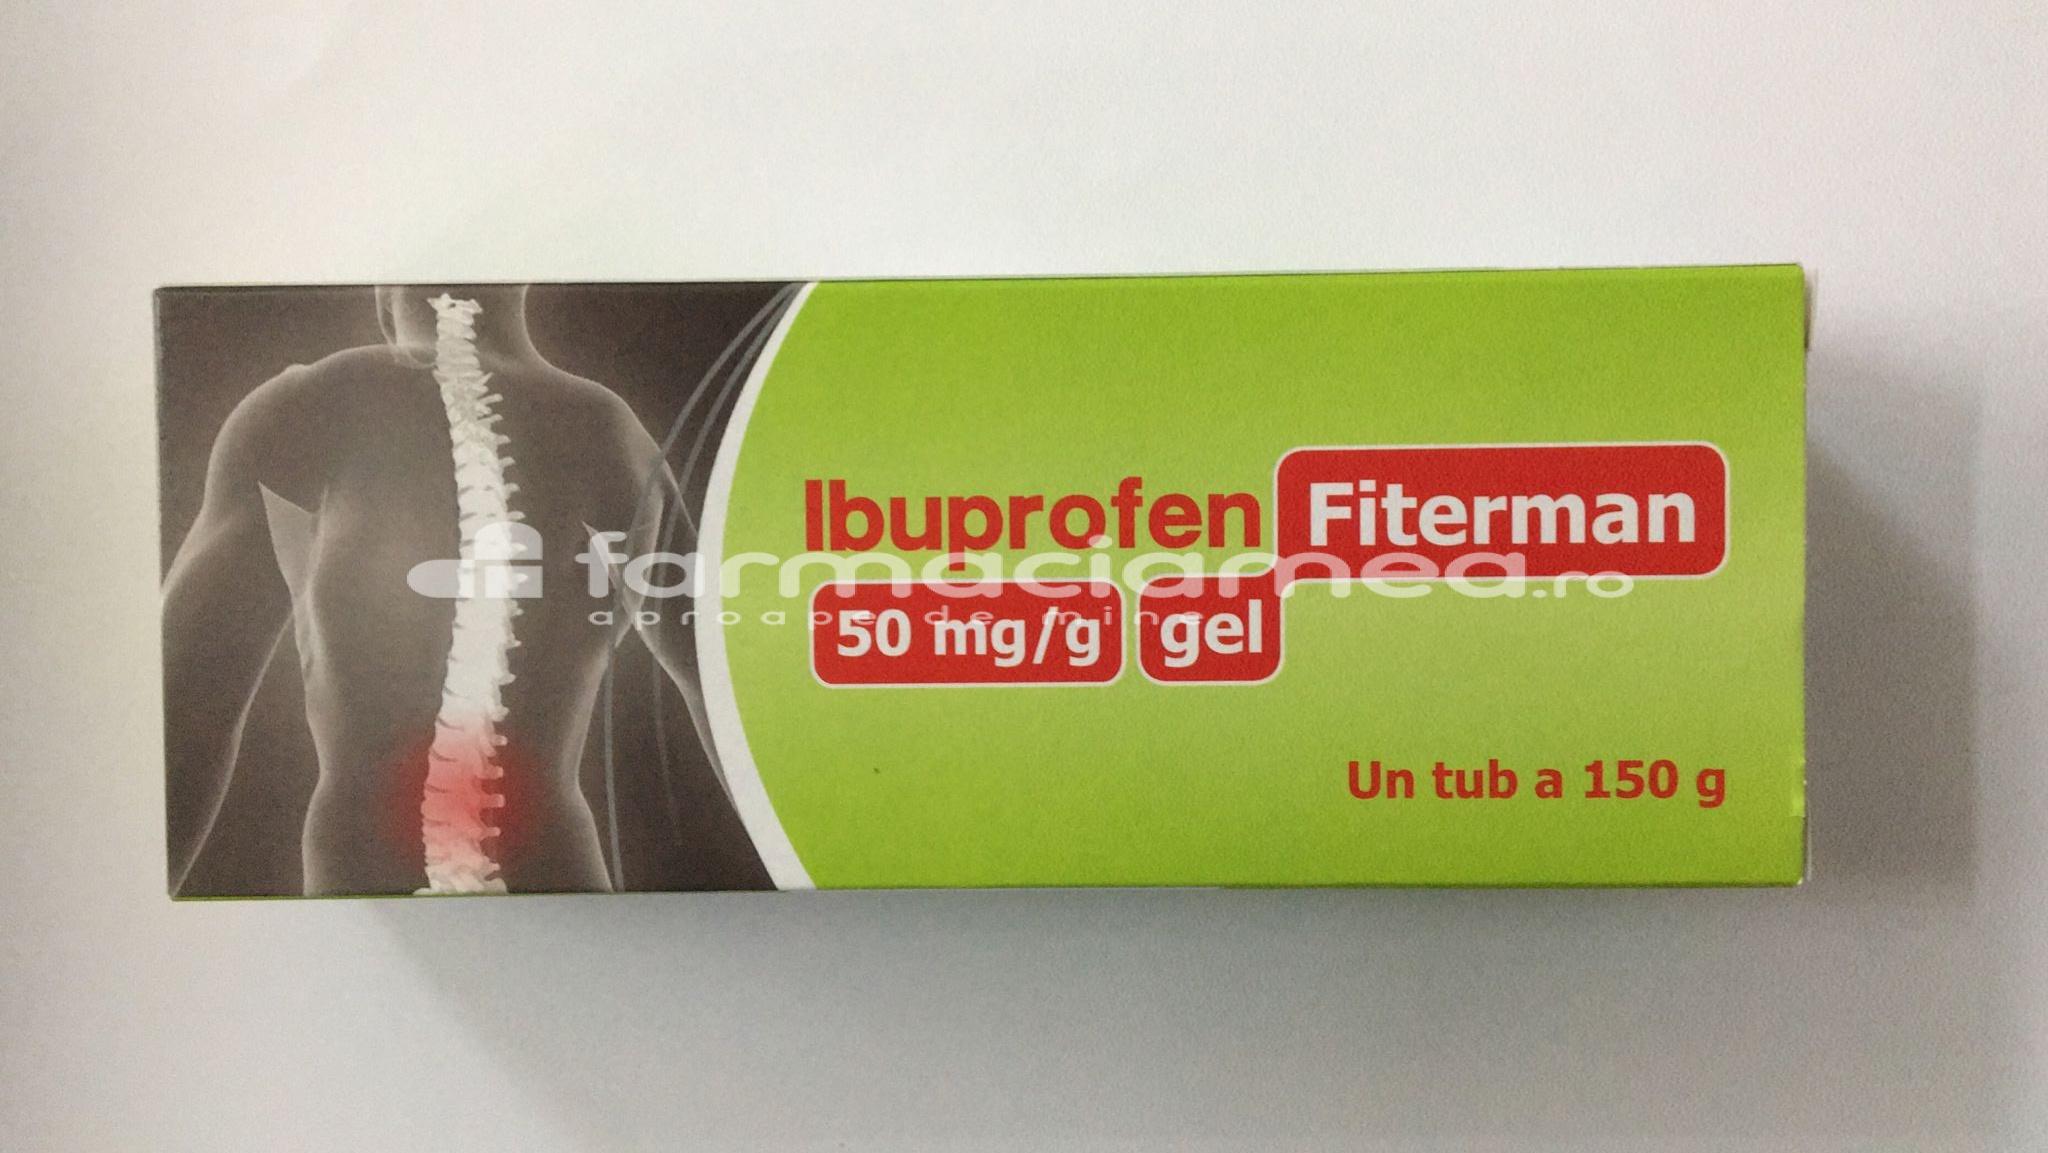 Durere OTC - Ibuprofen gel, cu efect antiinflamator, indicat in tratamentul local simptomatic al durerii si inflamatiei, tub 150 g, Fiterman Pharma, farmaciamea.ro